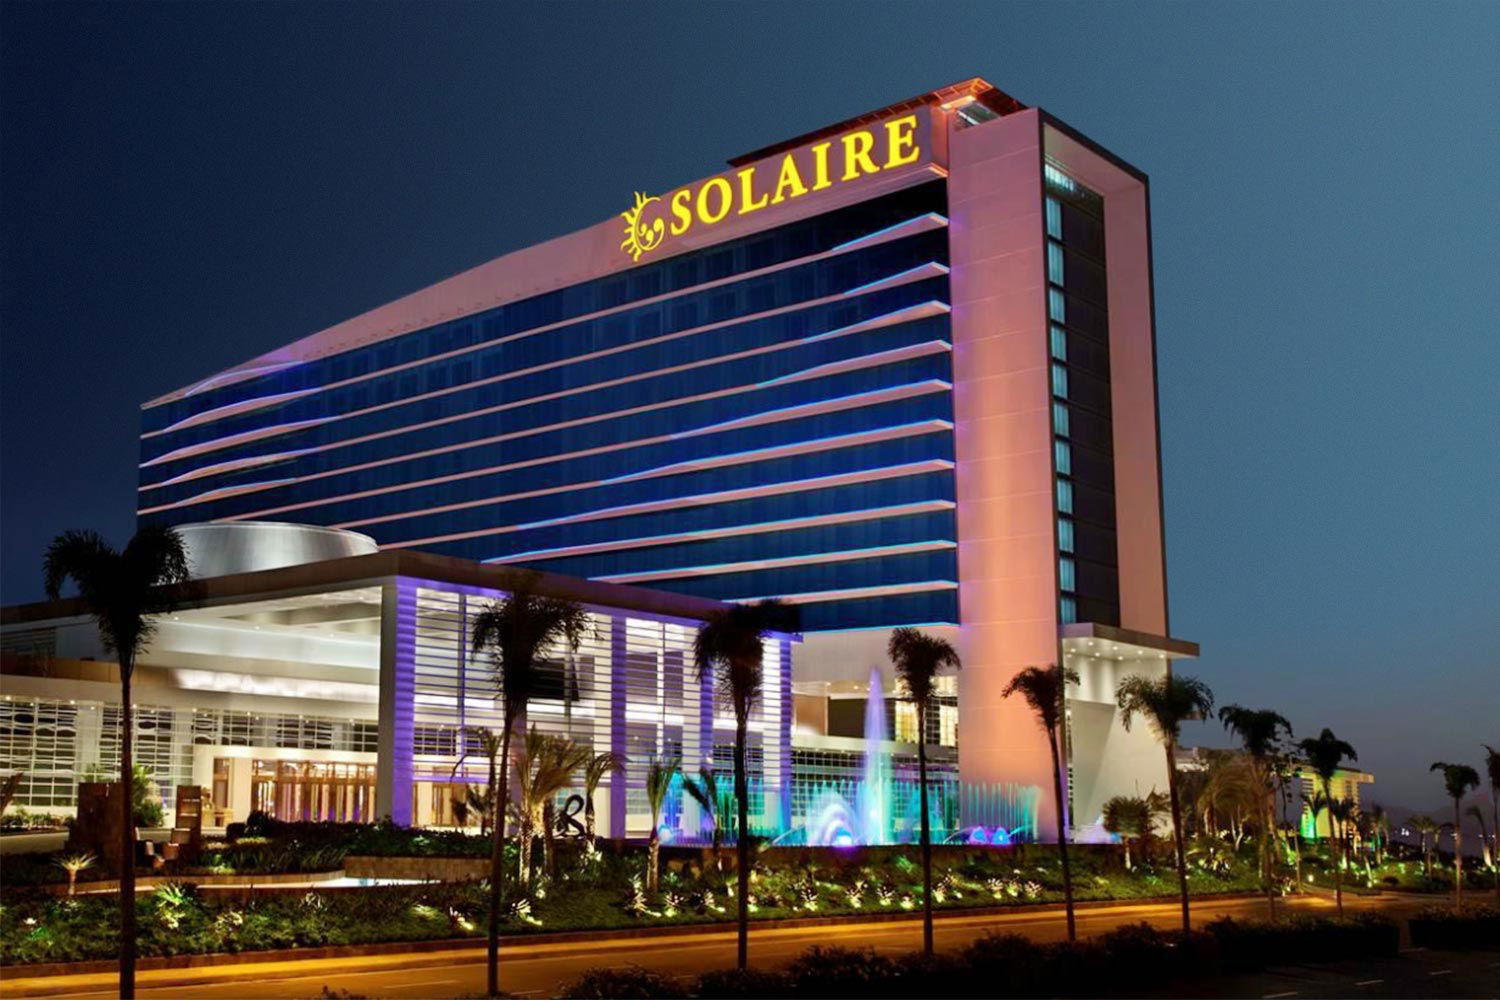 Solaire Casino